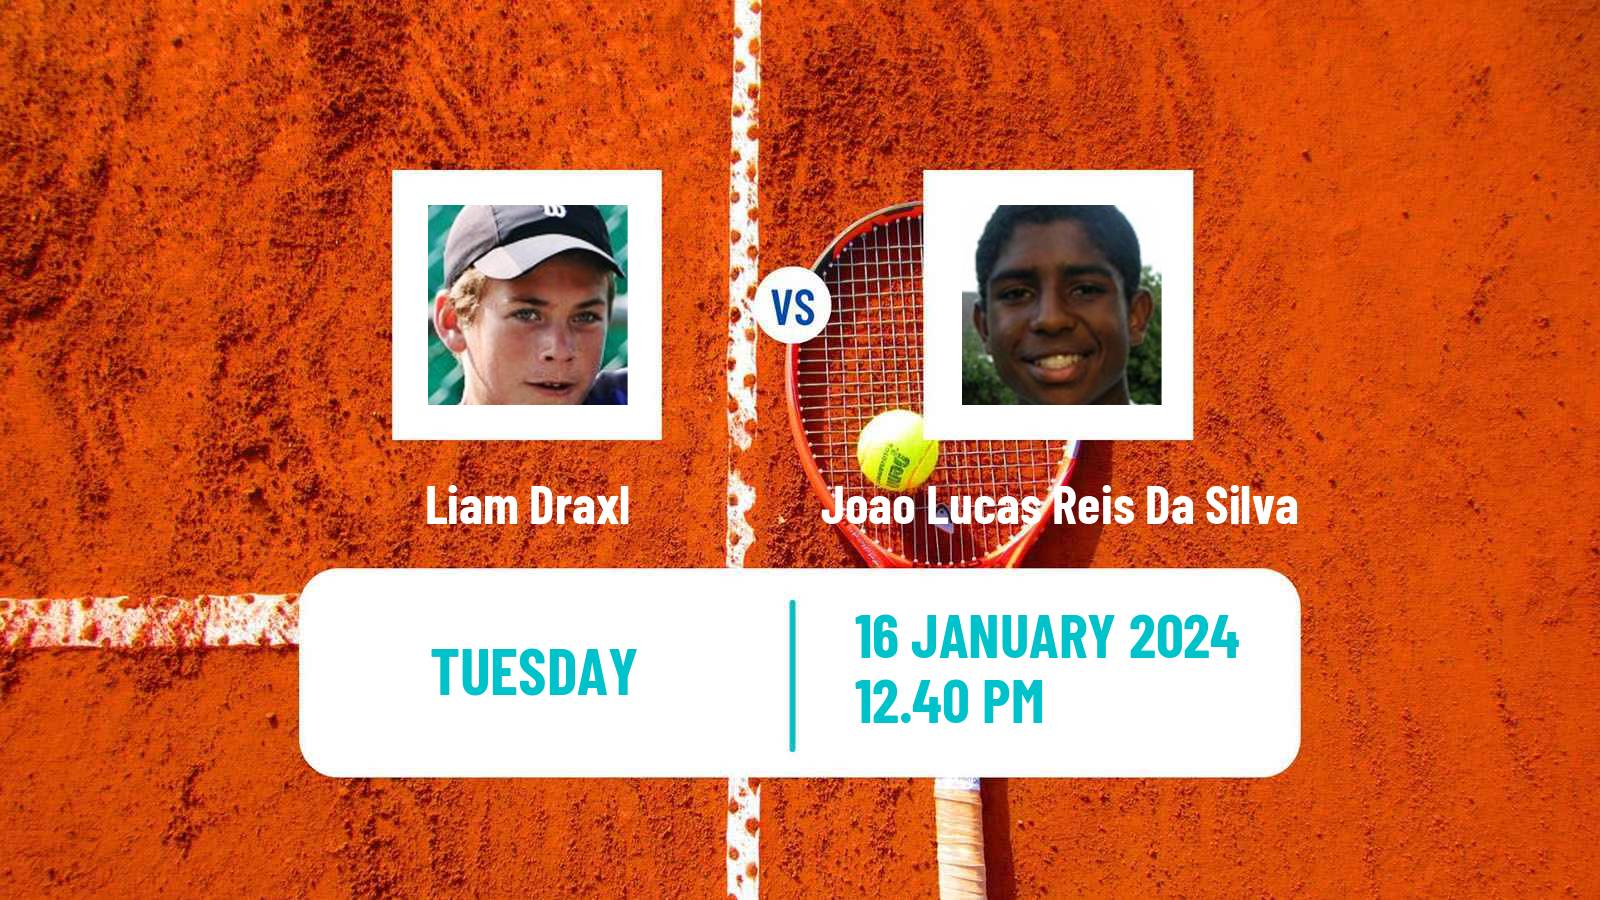 Tennis Buenos Aires 2 Challenger Men Liam Draxl - Joao Lucas Reis Da Silva